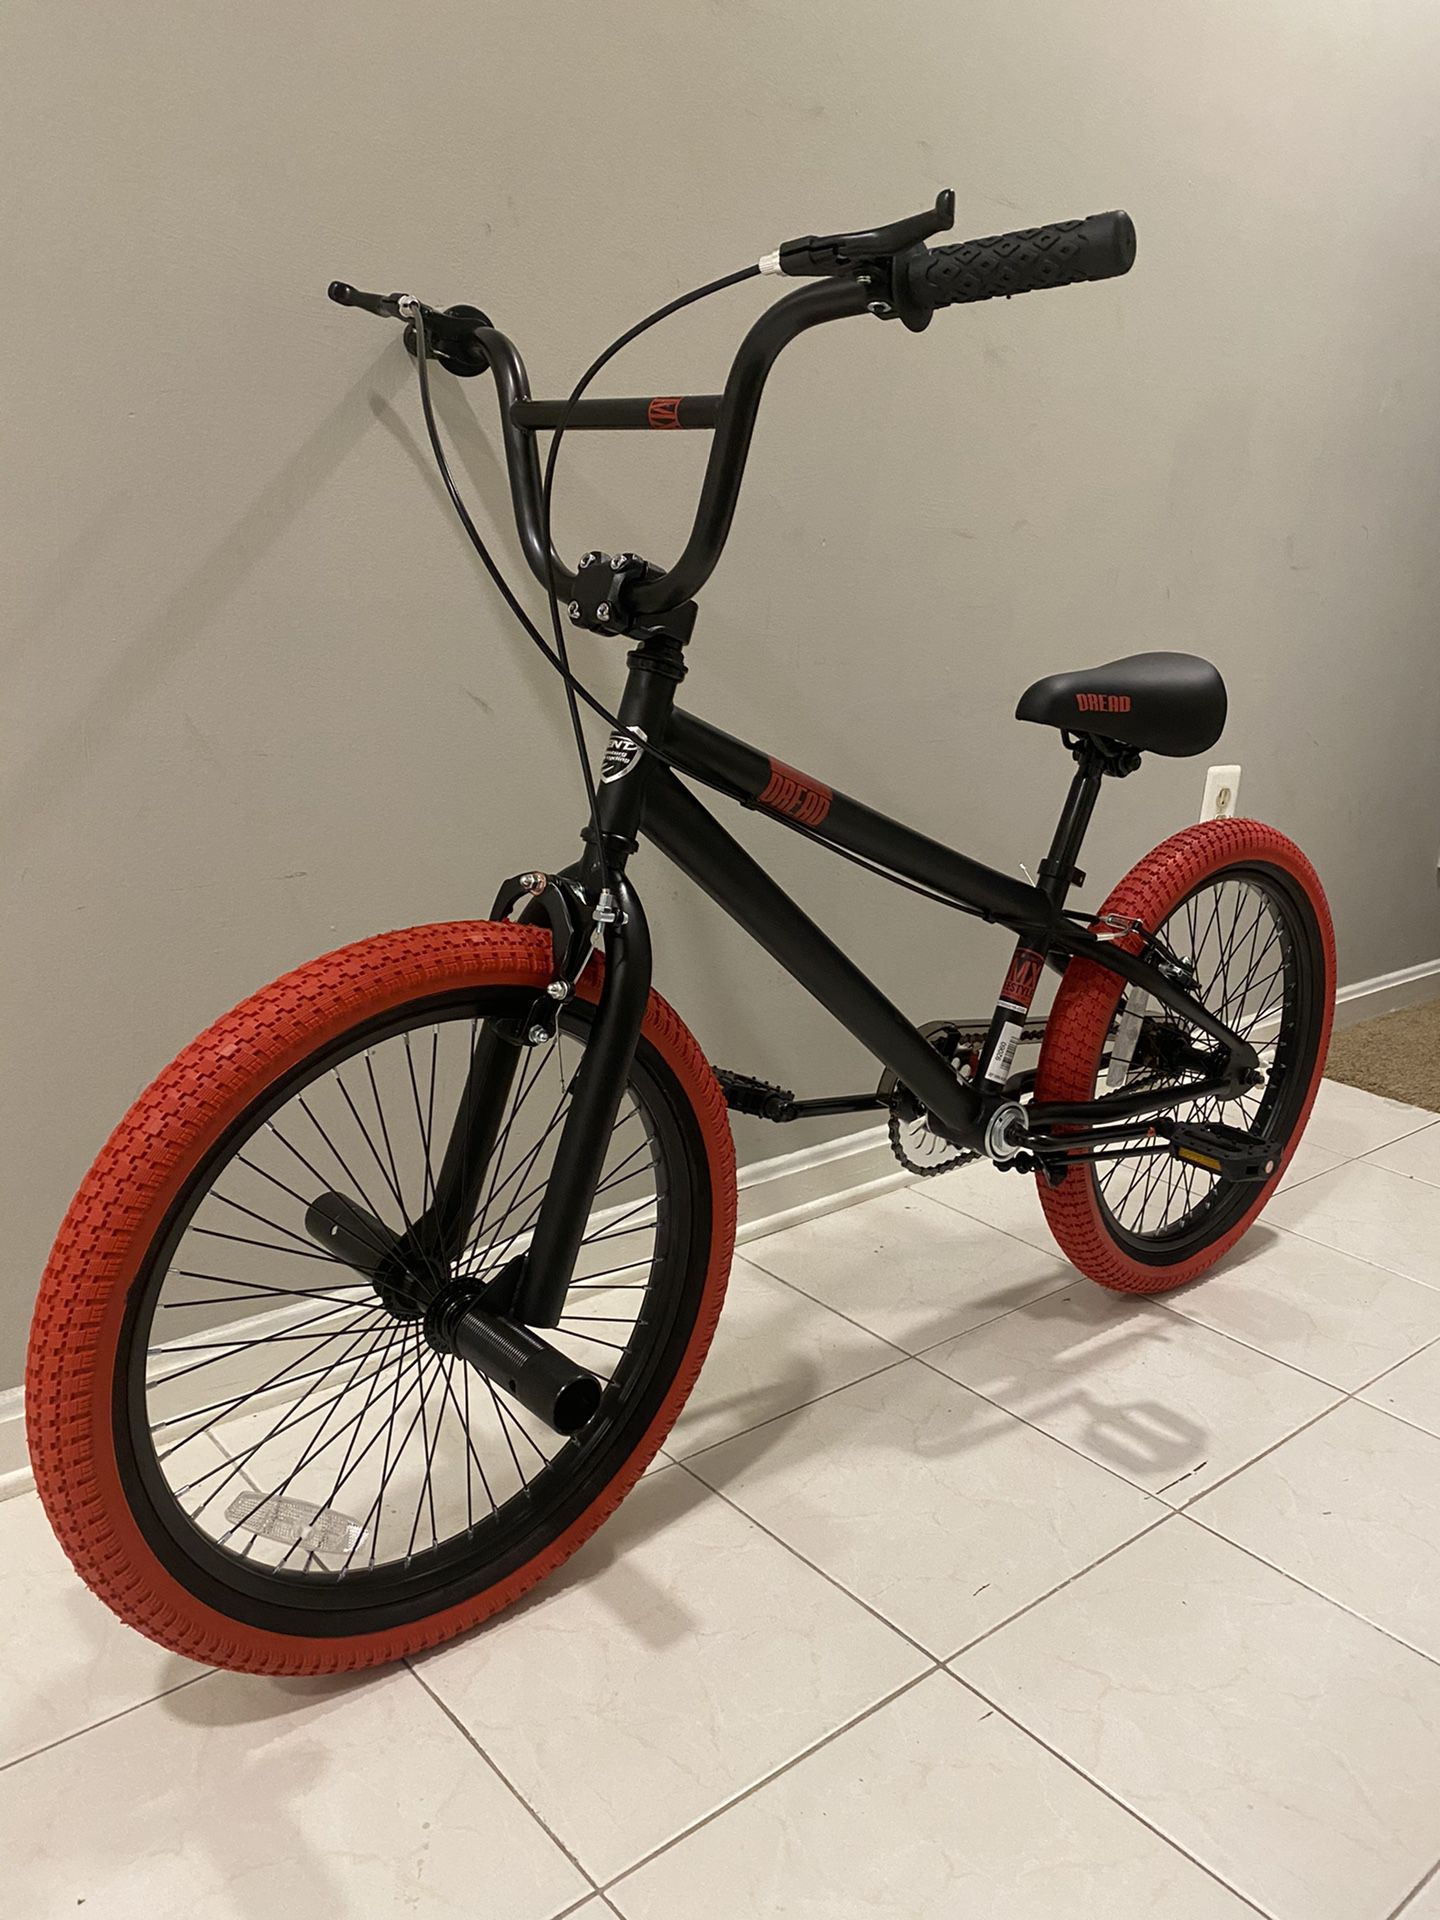 20” Kent BMX bicycle brand new - hot bike!